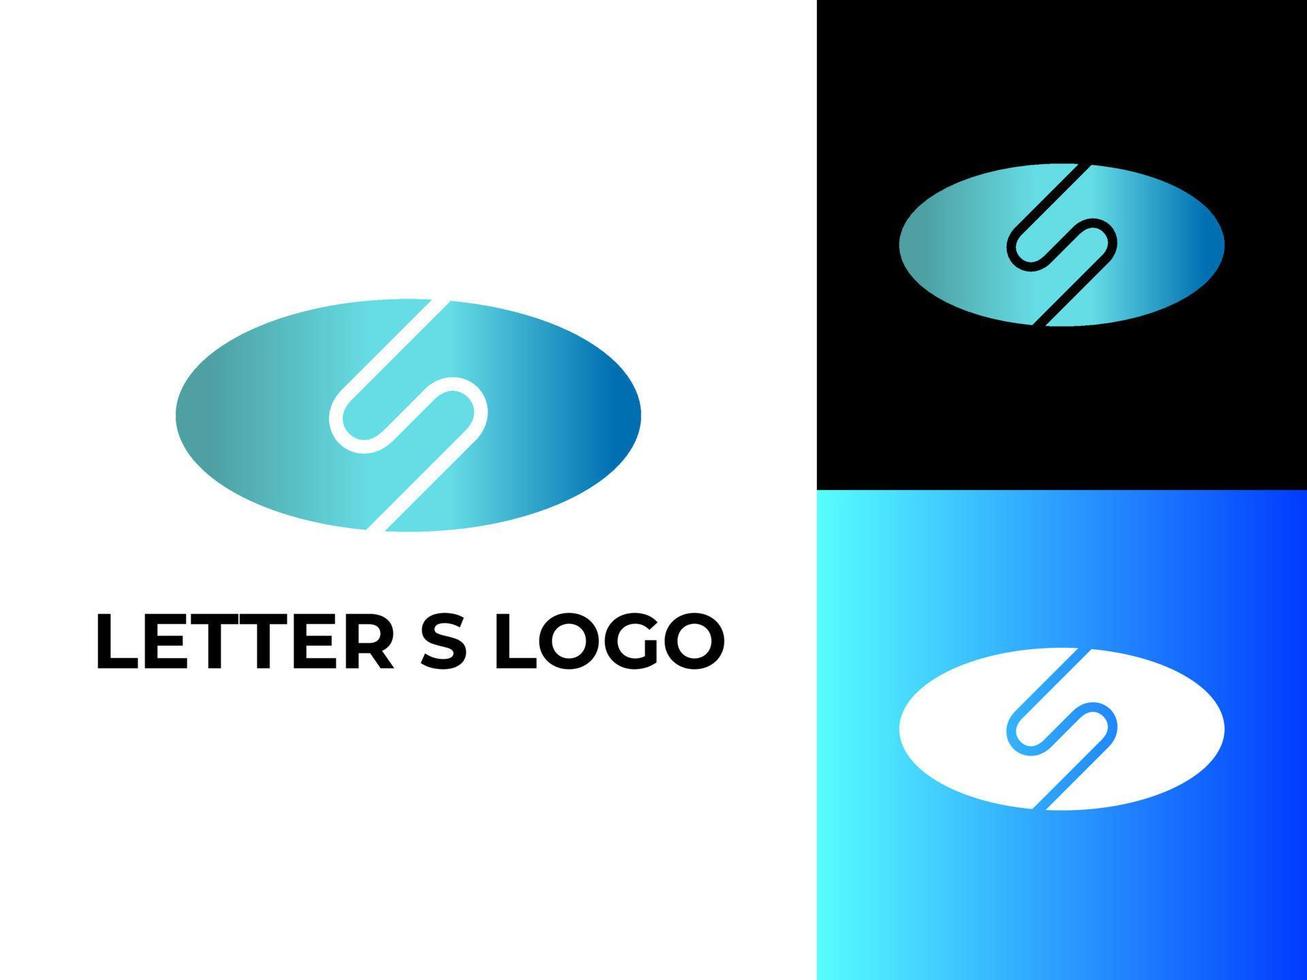 Letter S logo icon design template elements vector